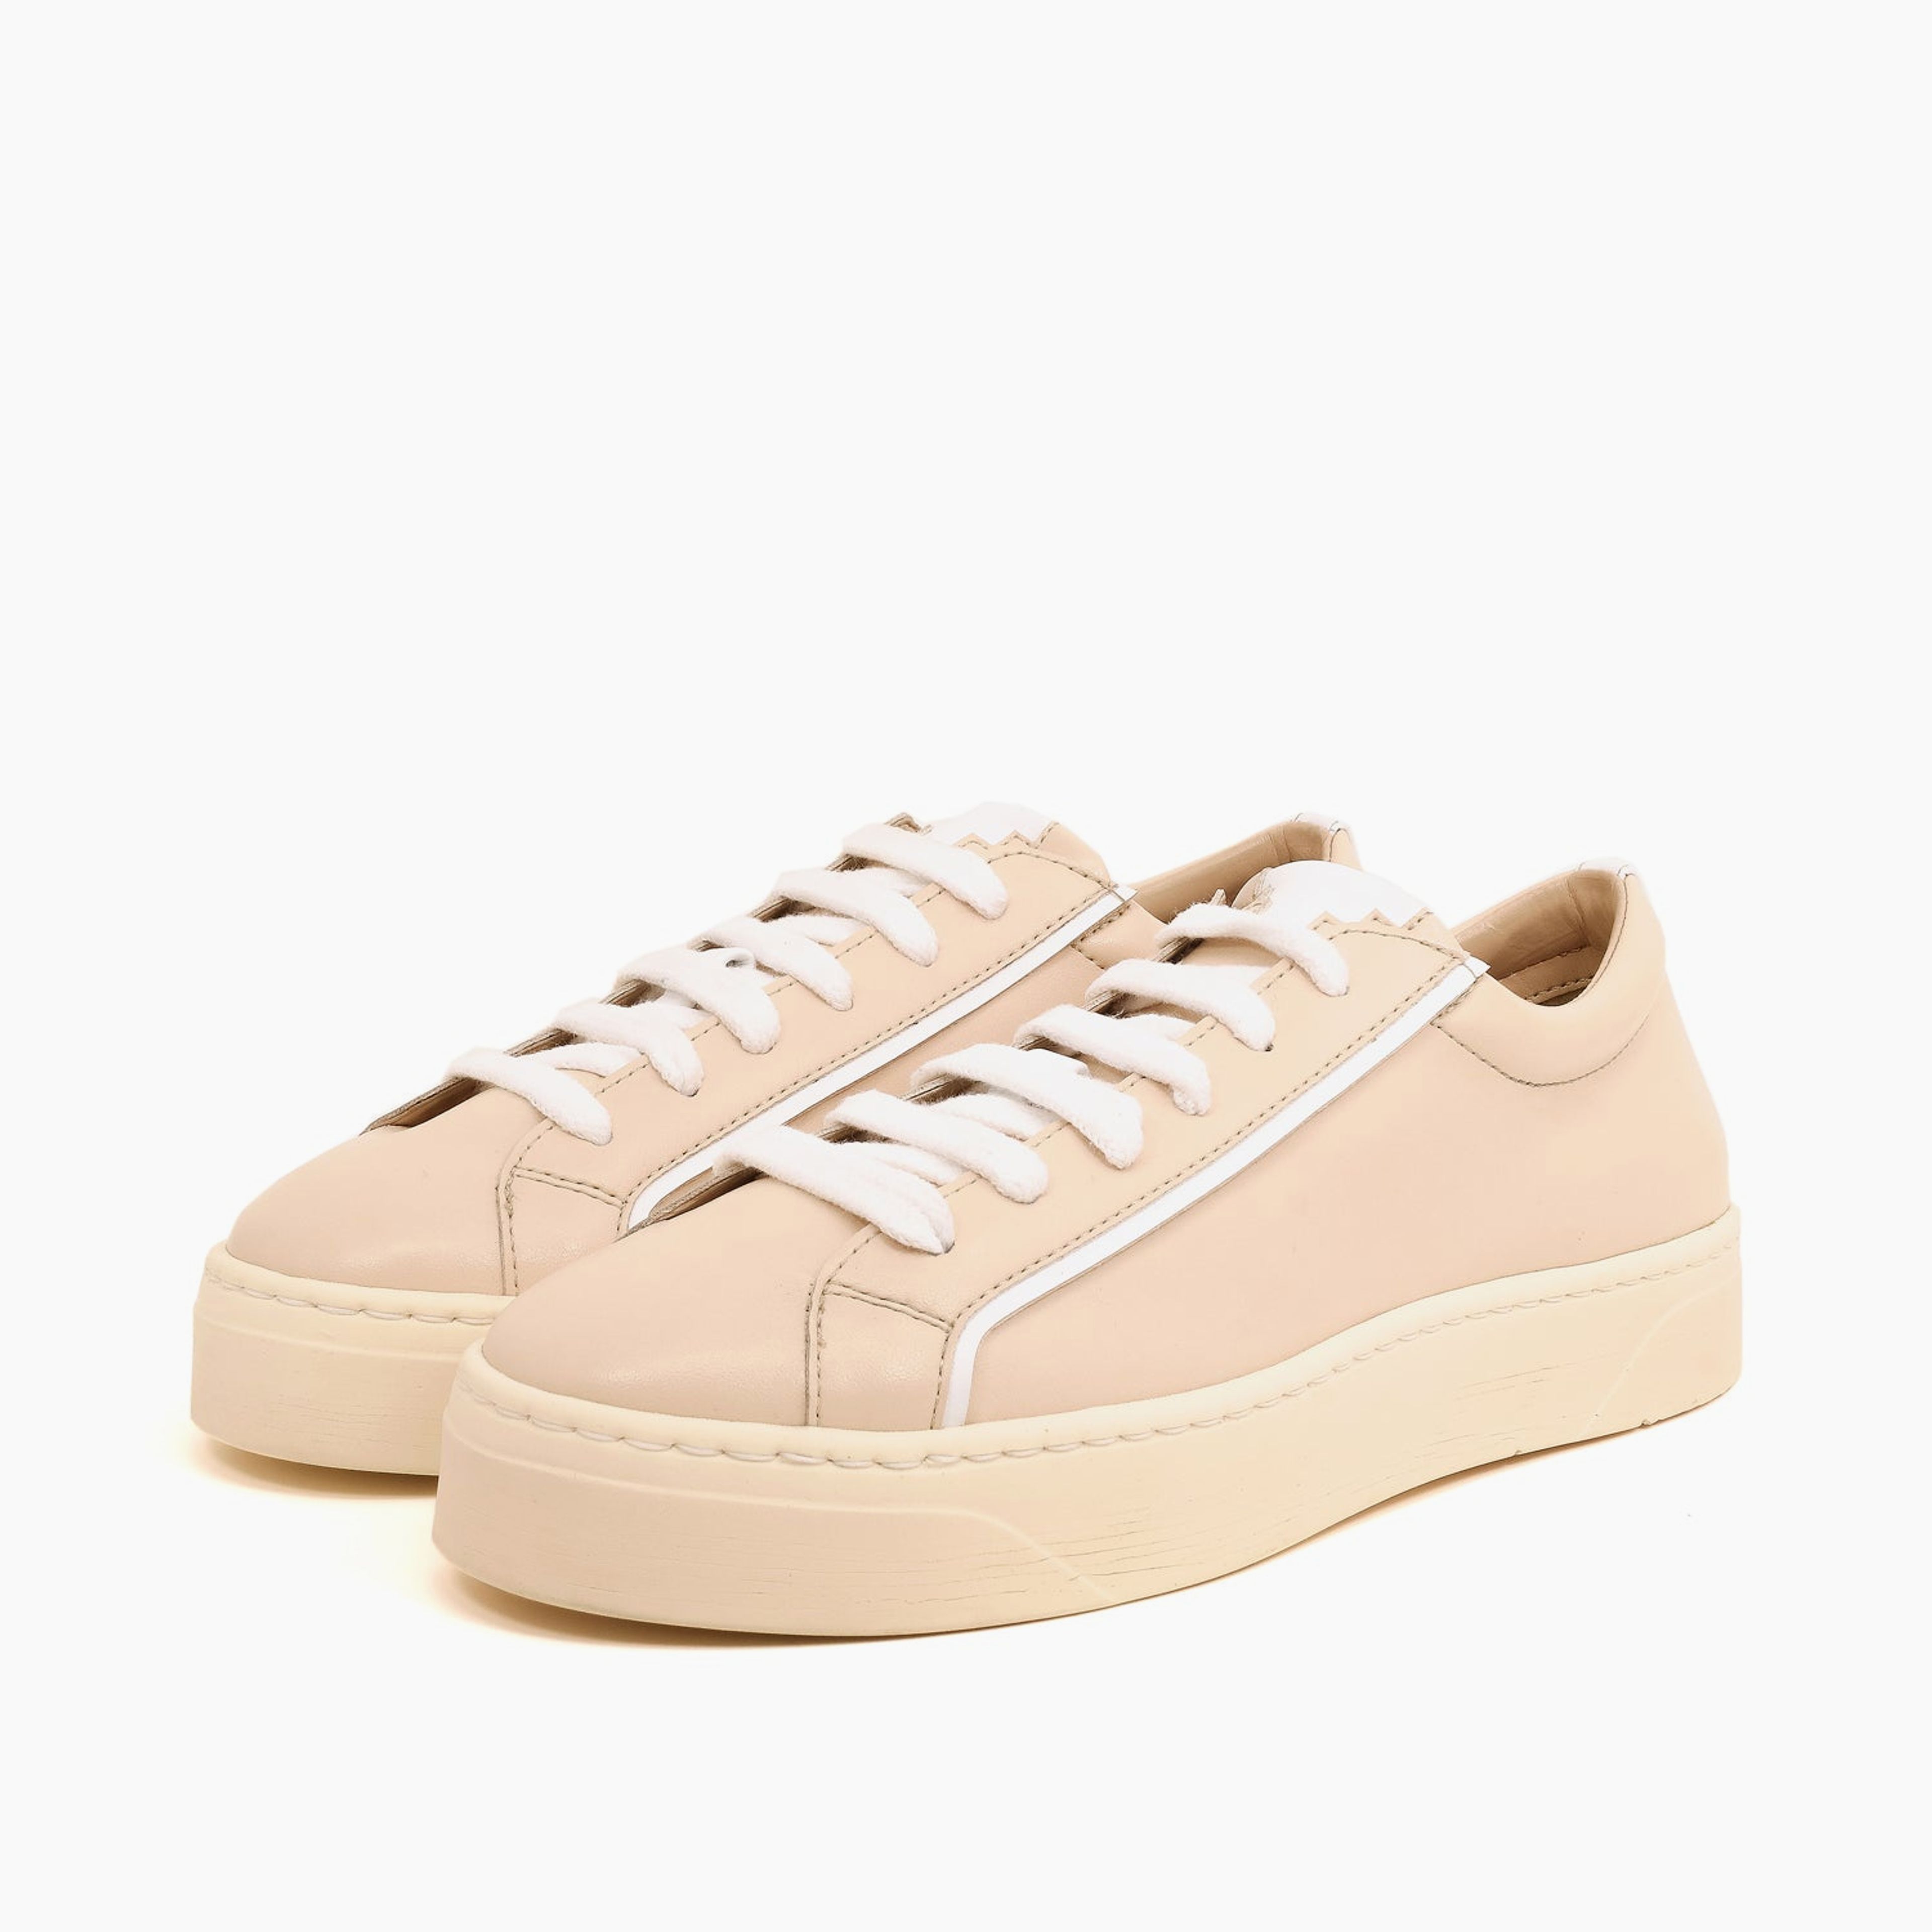 MEL sand/white vegan apple leather sneakers